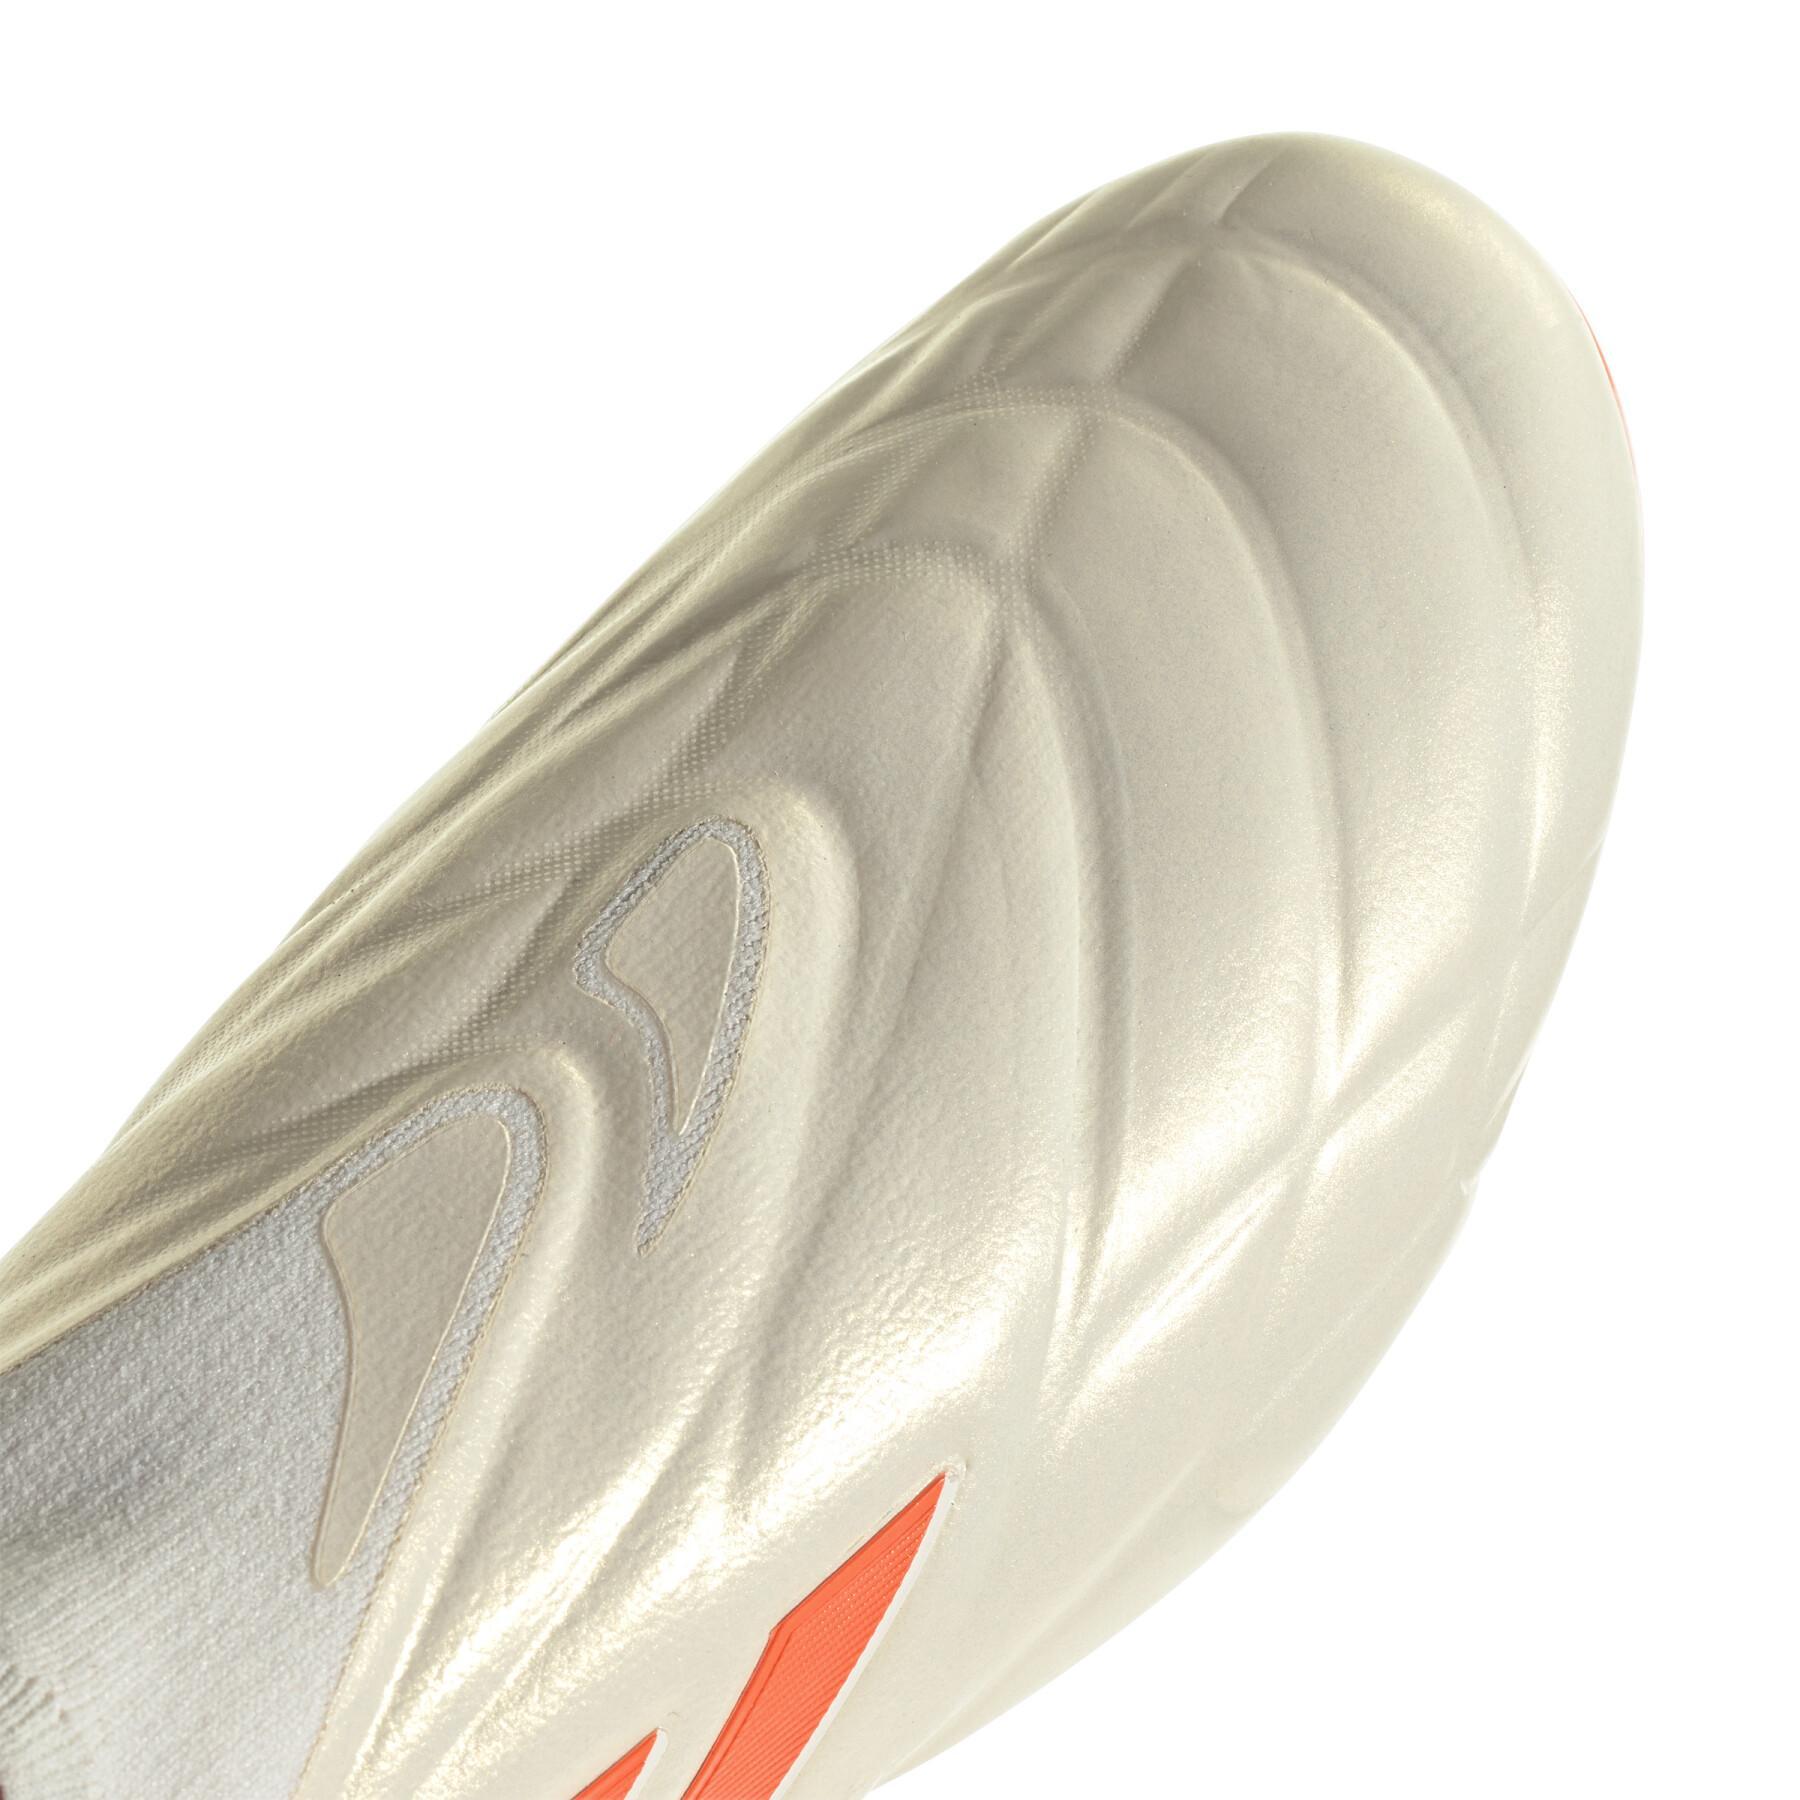 Soccer shoes adidas Copa Pure+ FG Heatspawn Pack